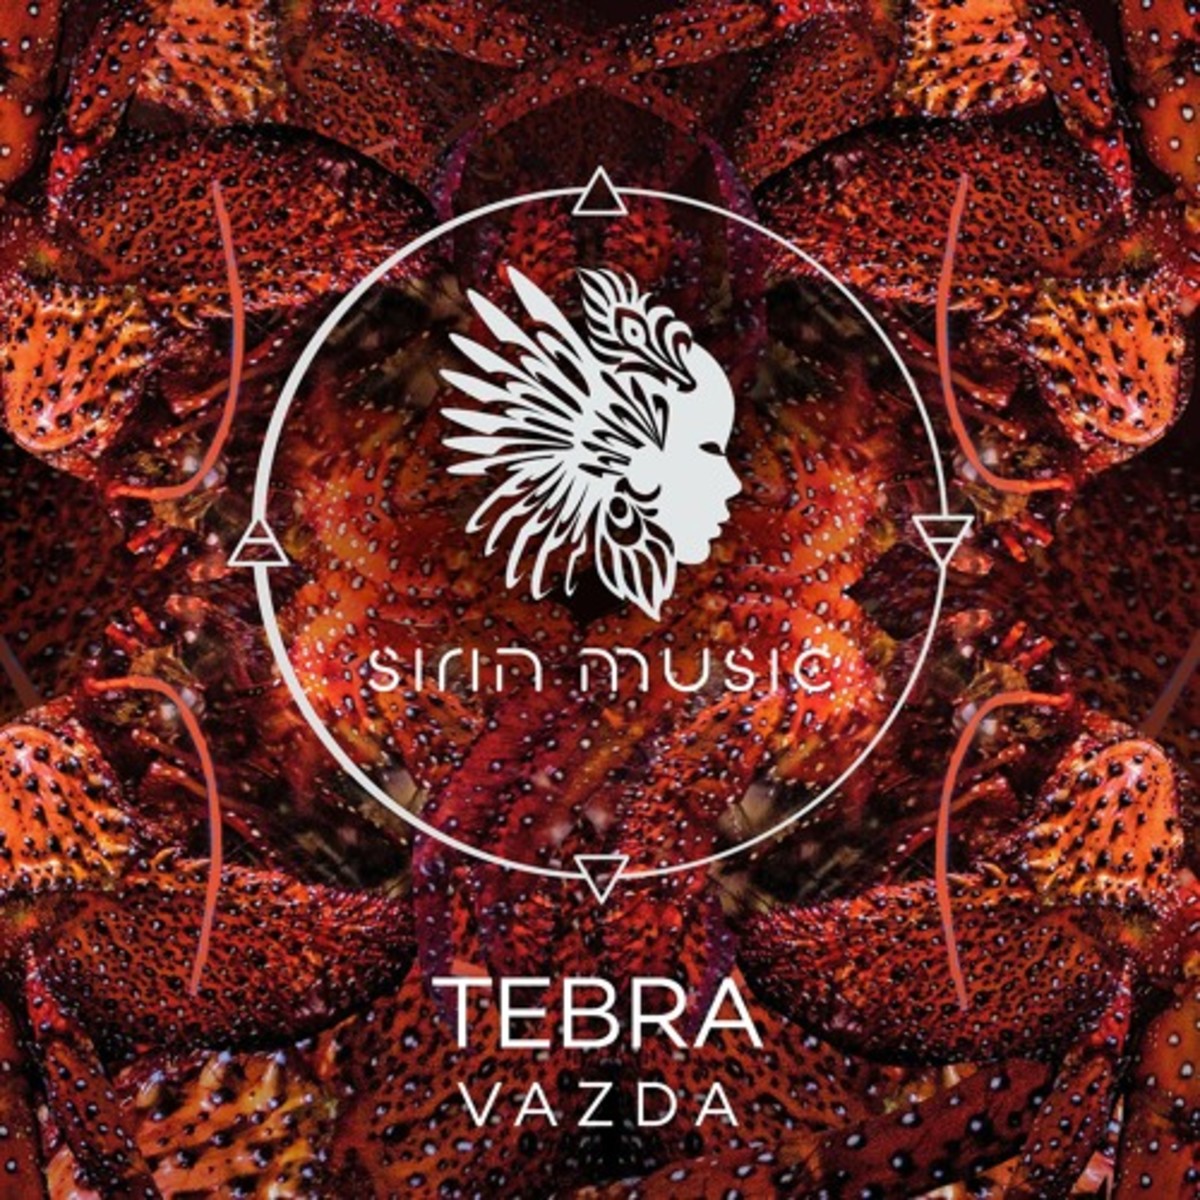 Tebra - Vazda (Original Mix) [Sirin Music]